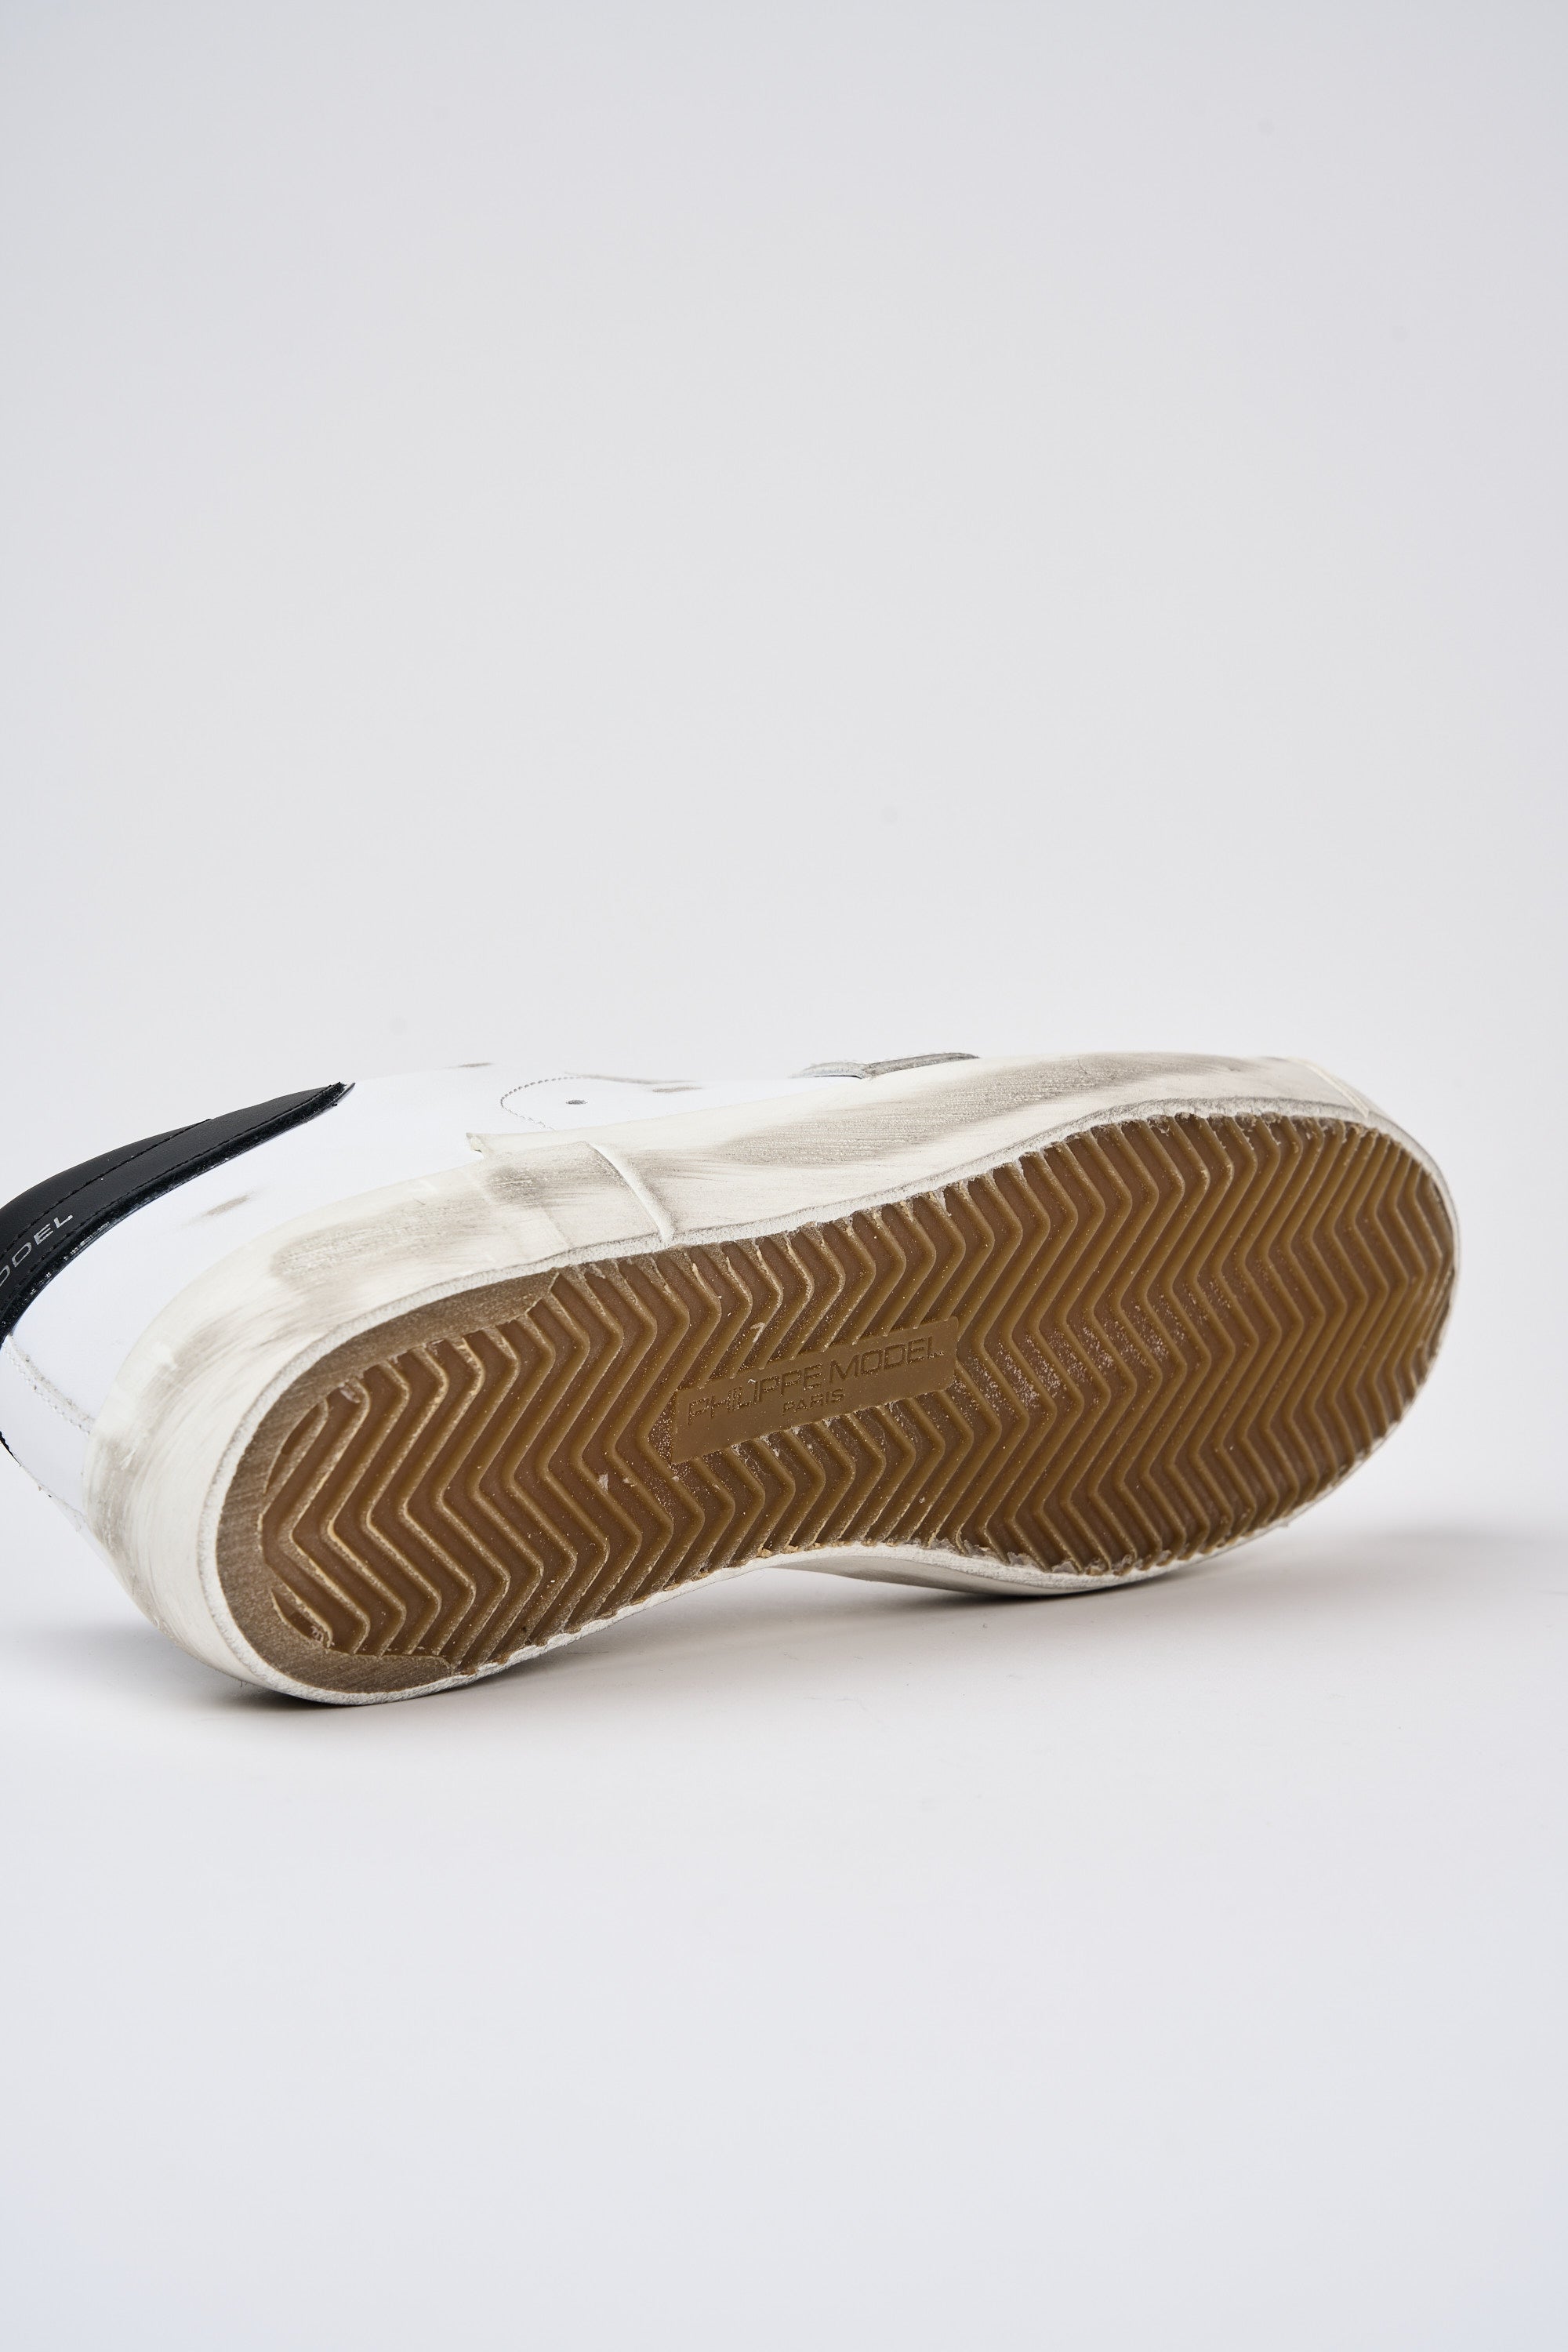 Philippe Model Sneaker Prsx Leather White/Black-6